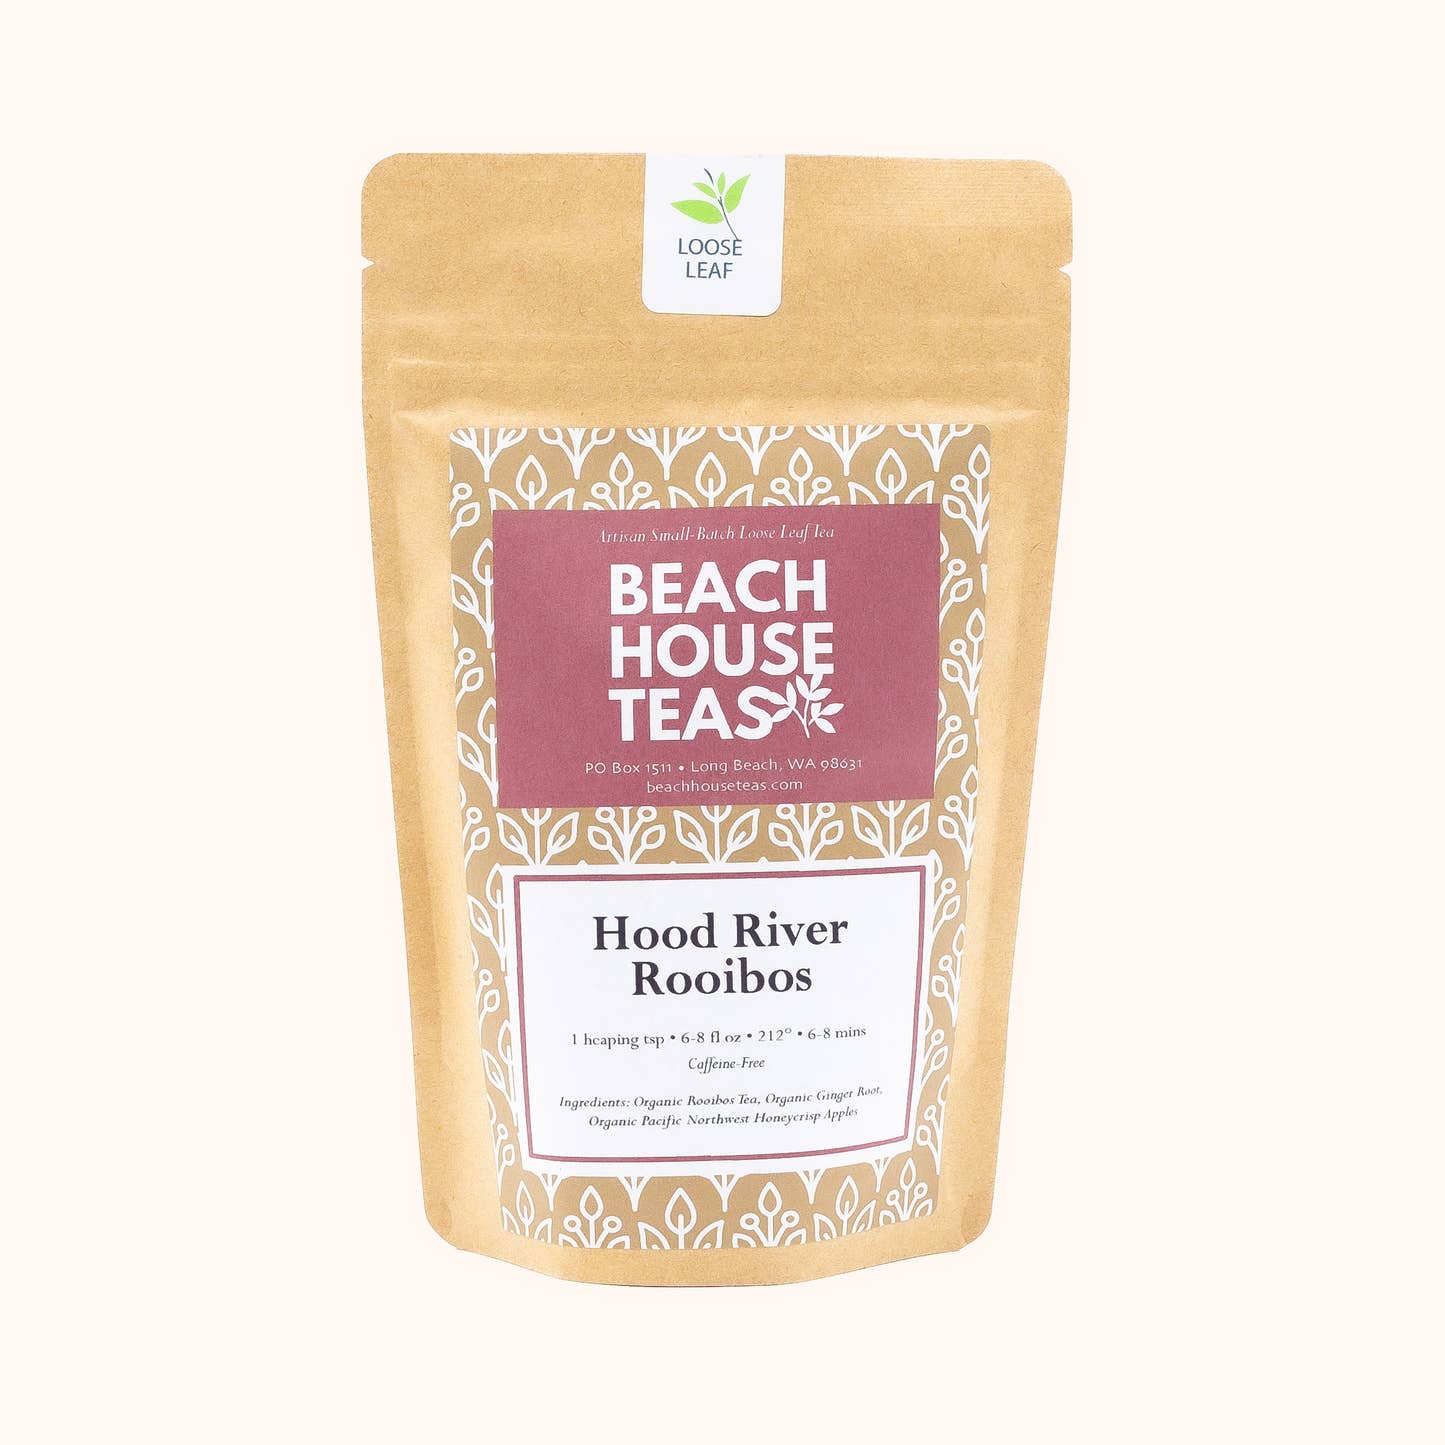 Hood River Rooibos loose leaf tea by Beach House Teas printed kraft pouch